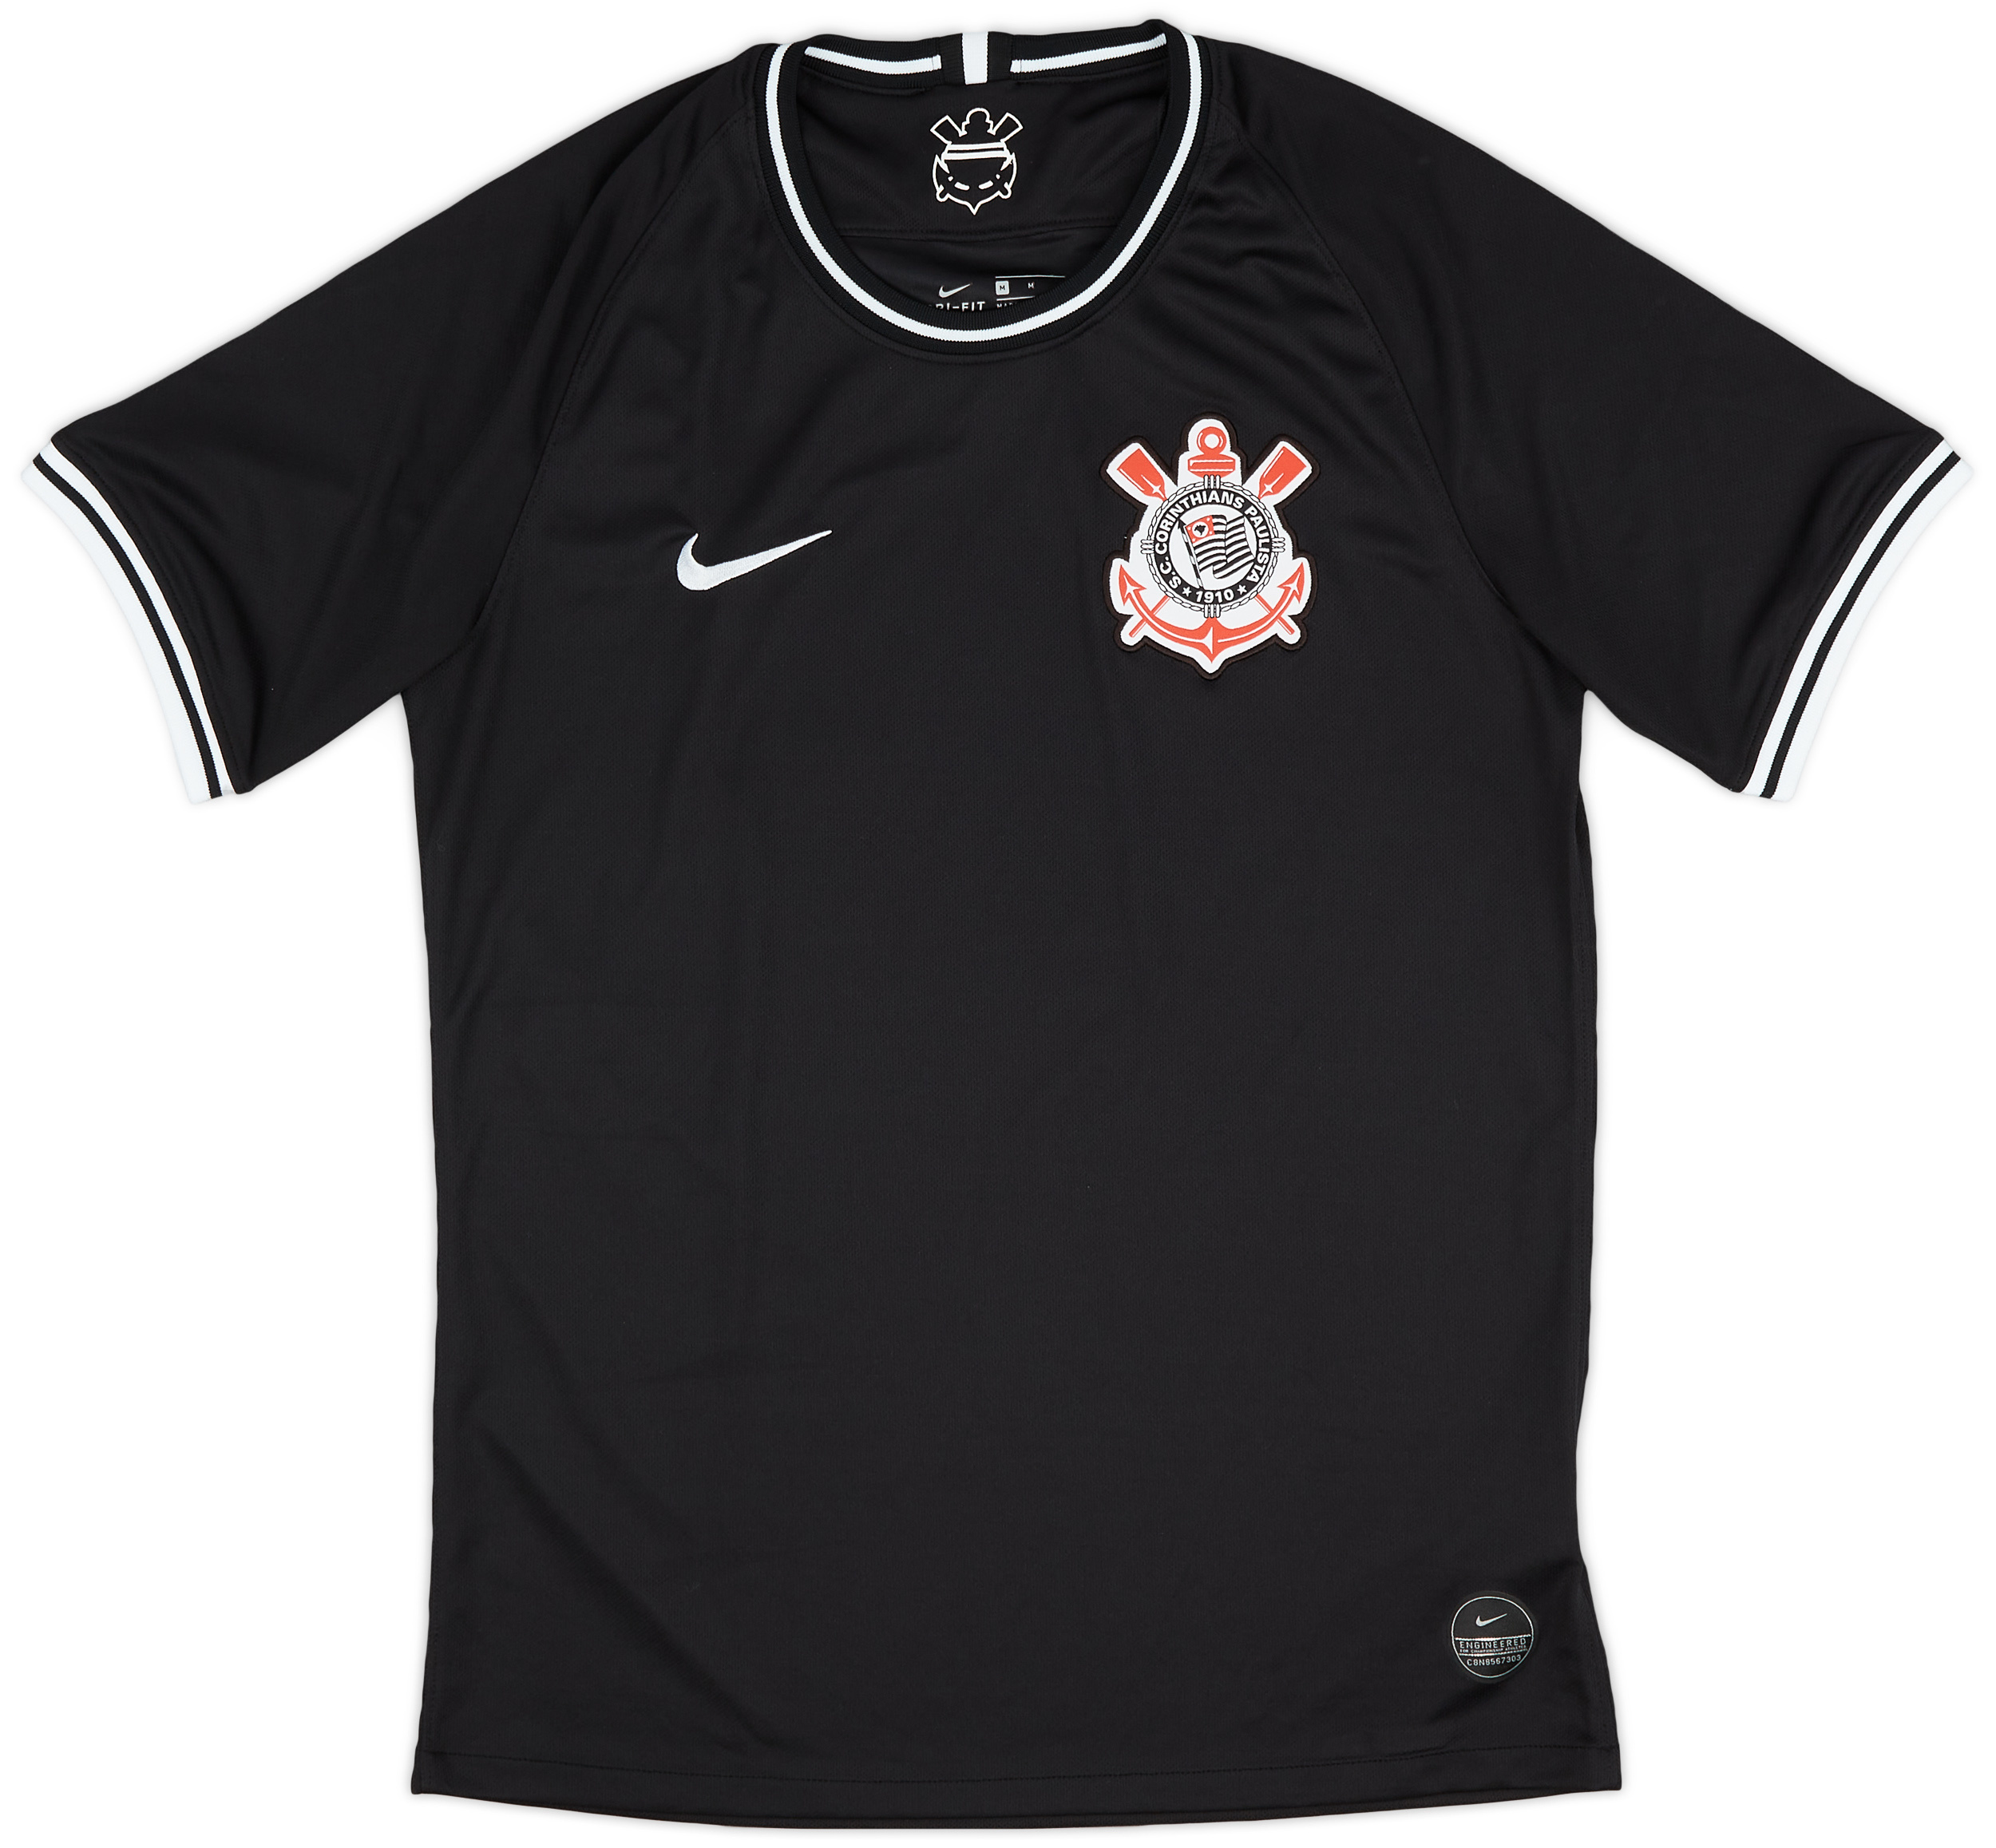 Retro Corinthians Shirt